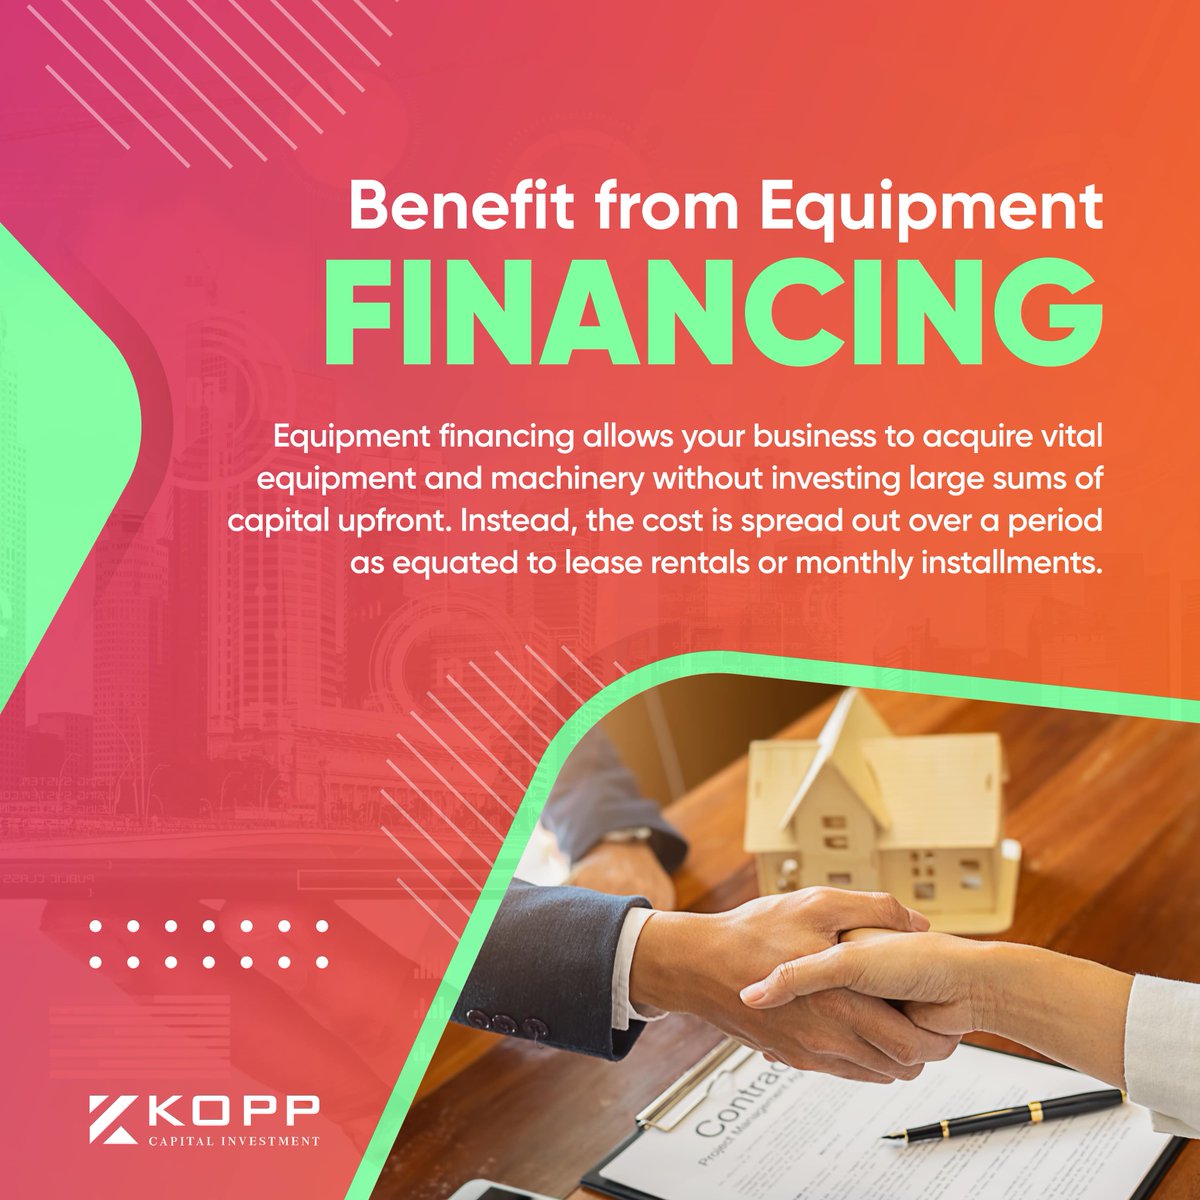 Benefit from Equipment Financing

#EquipmentFinancing #FinancingOption #BusinessLoan #FinancialSolution
#KoppCapitalInvestment